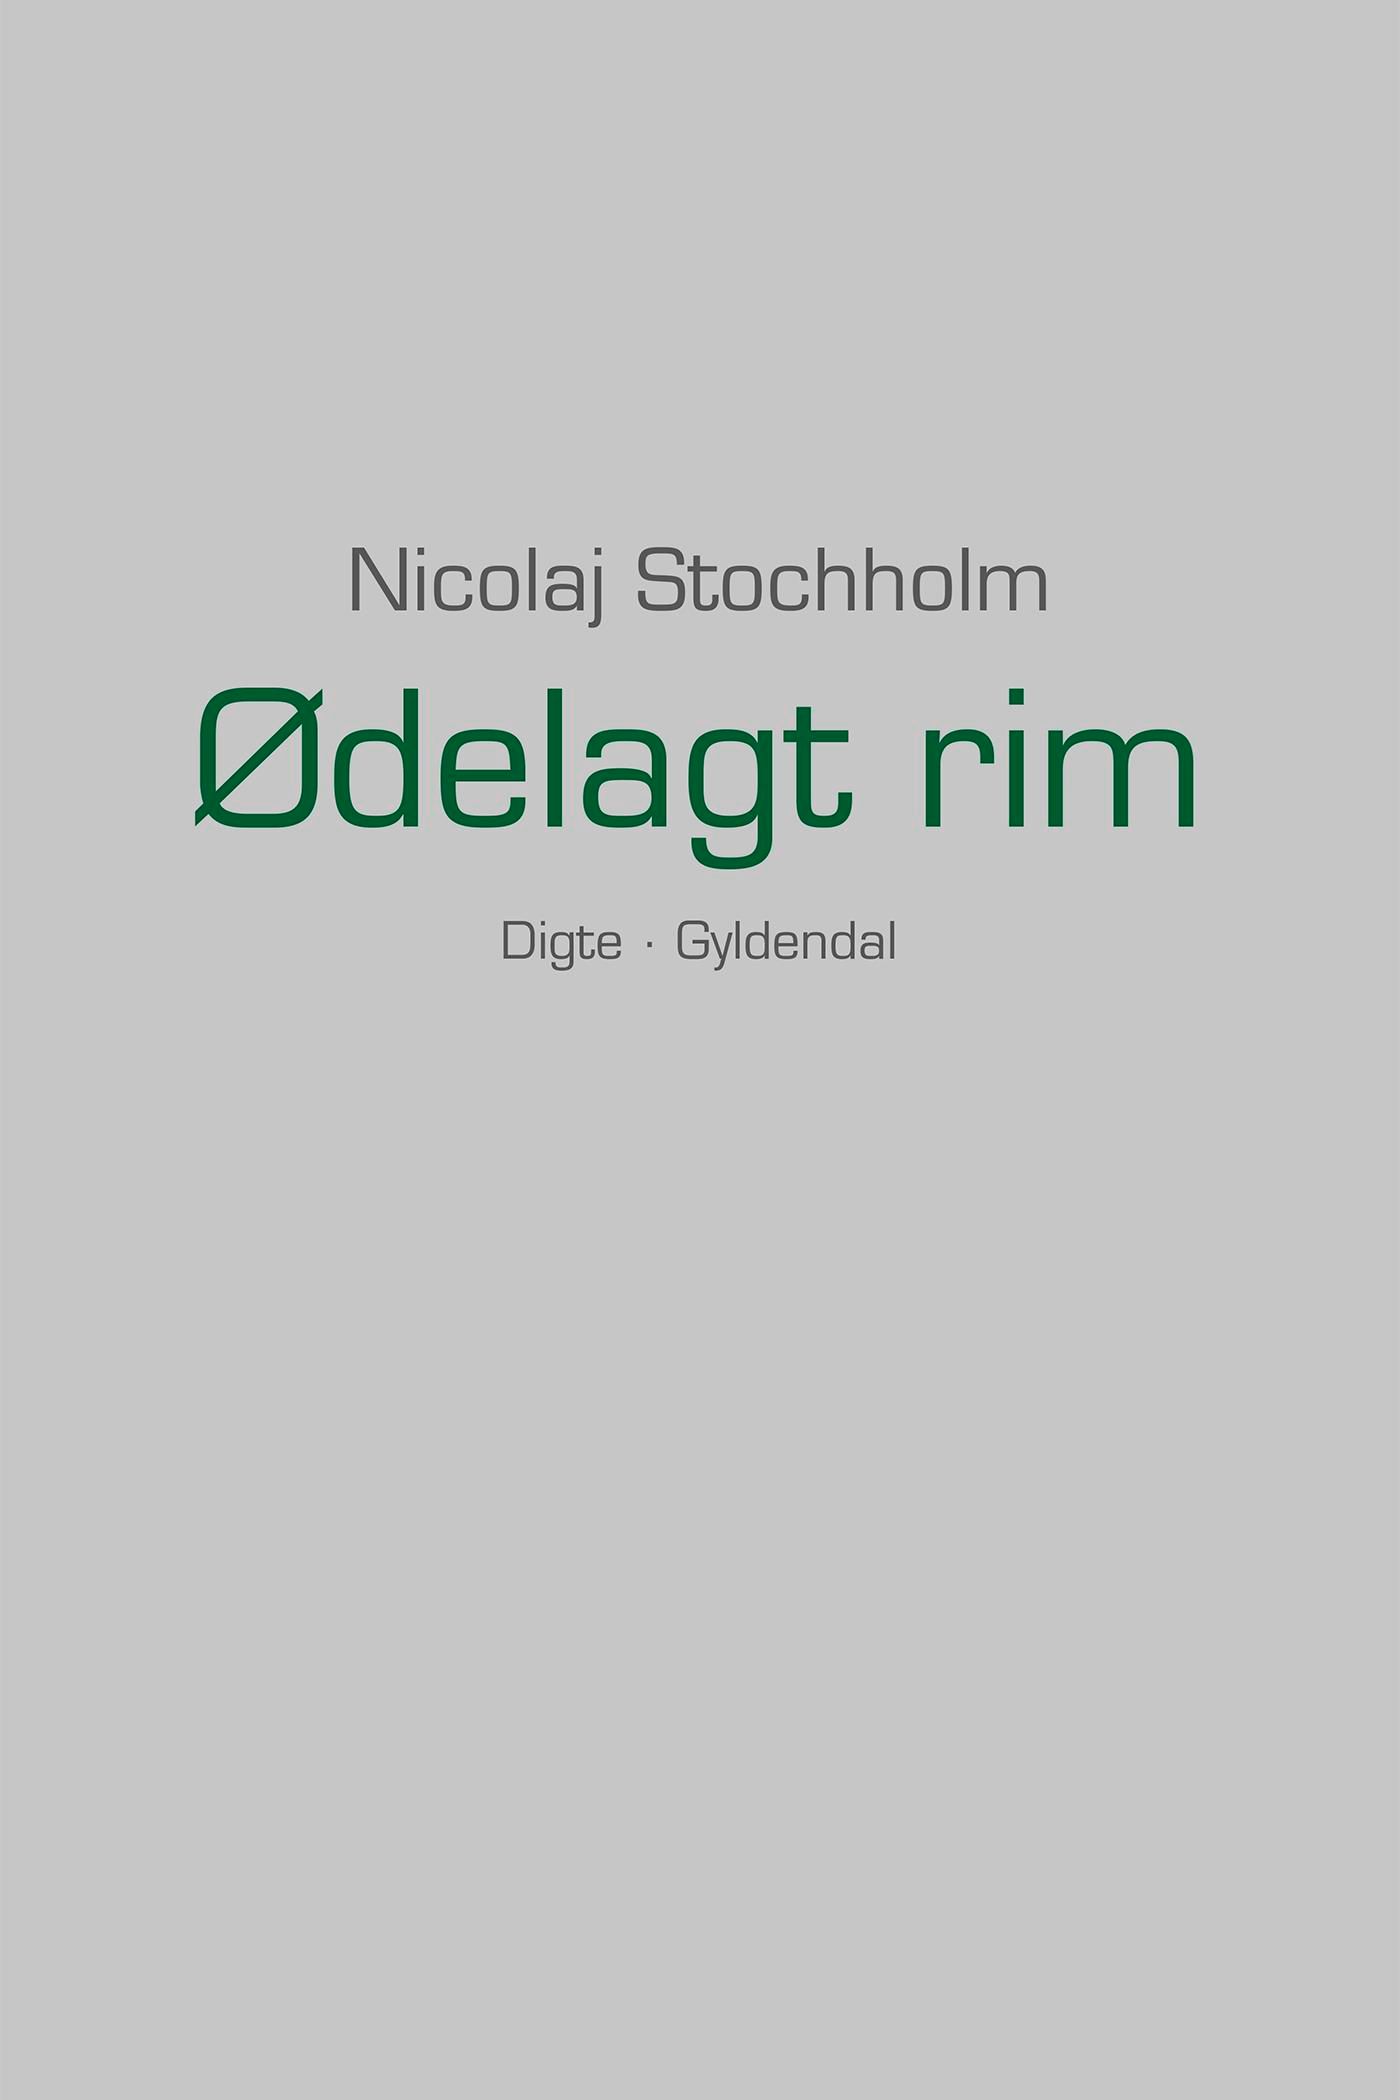 Ødelagt rim, eBook by Nicolaj Stochholm